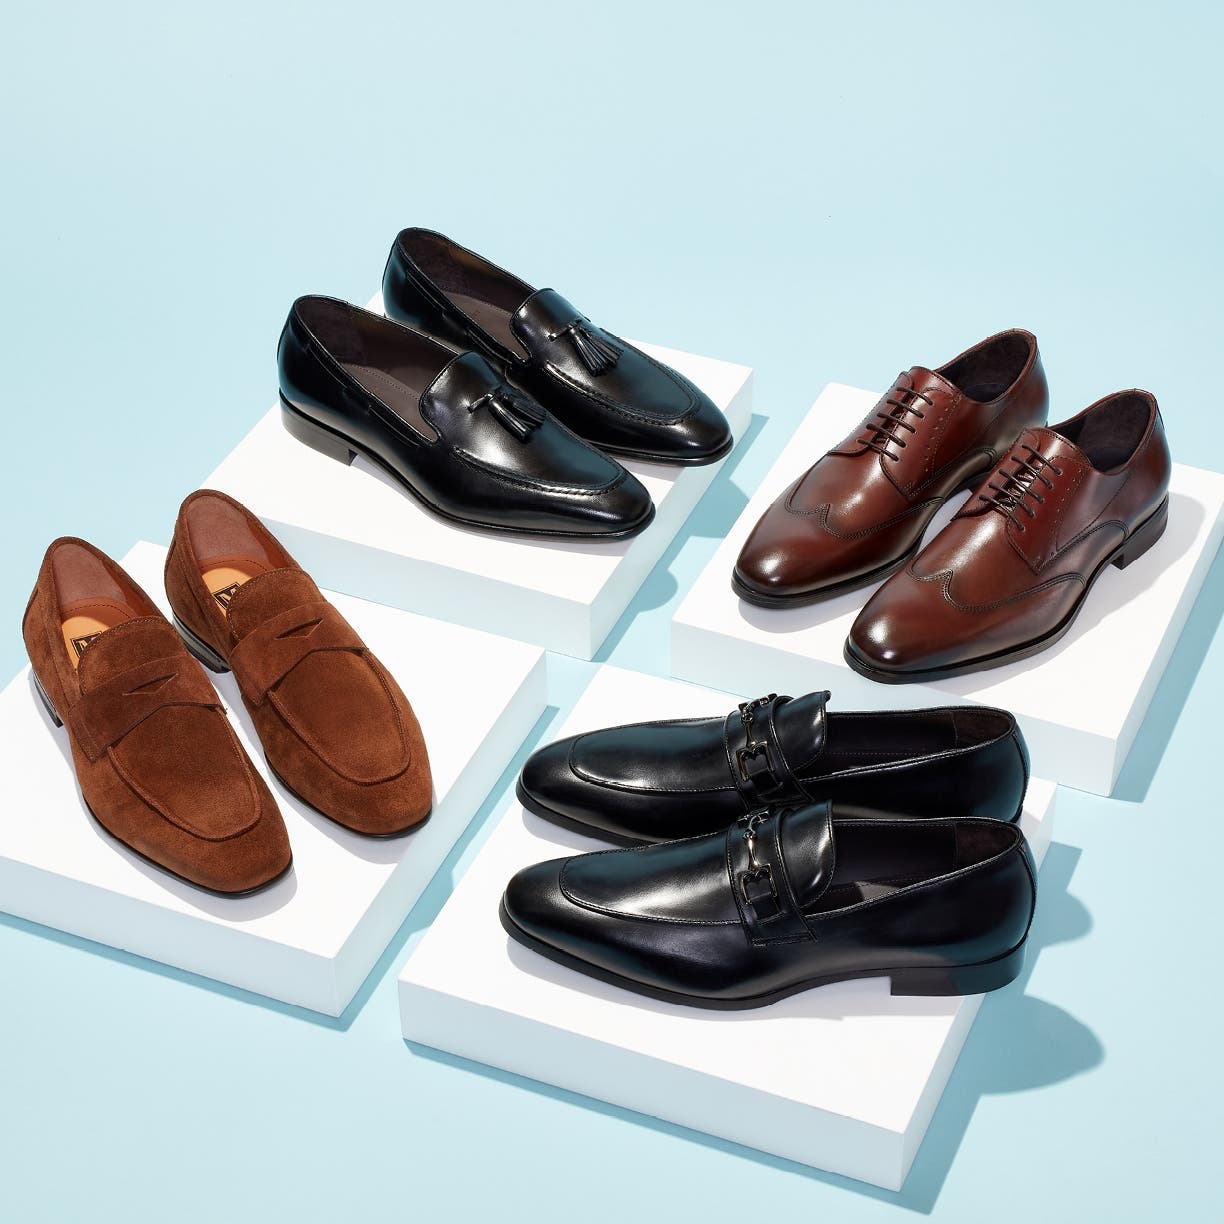 Buy Men's formal shoes online at up to 60% off 